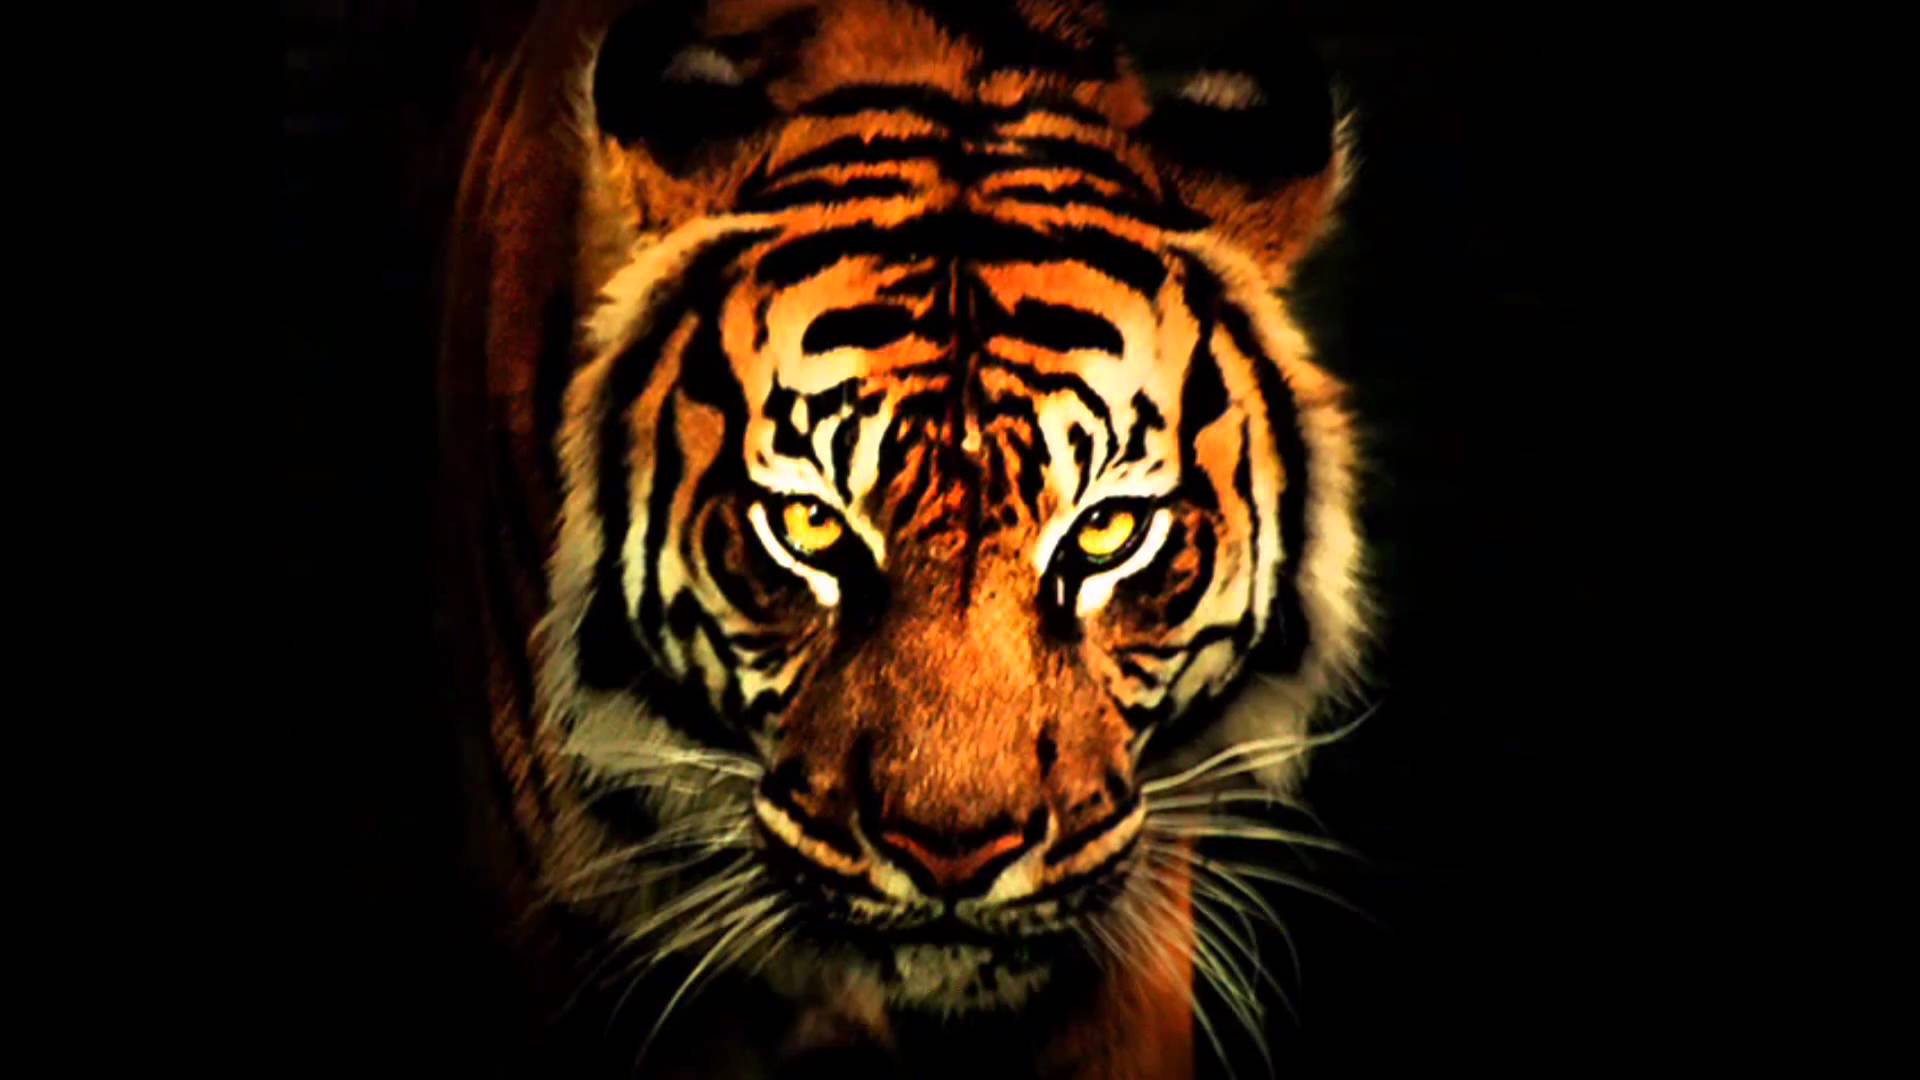 Survivor Eye Of The Tiger traduzido 1080p Hd - YouTube